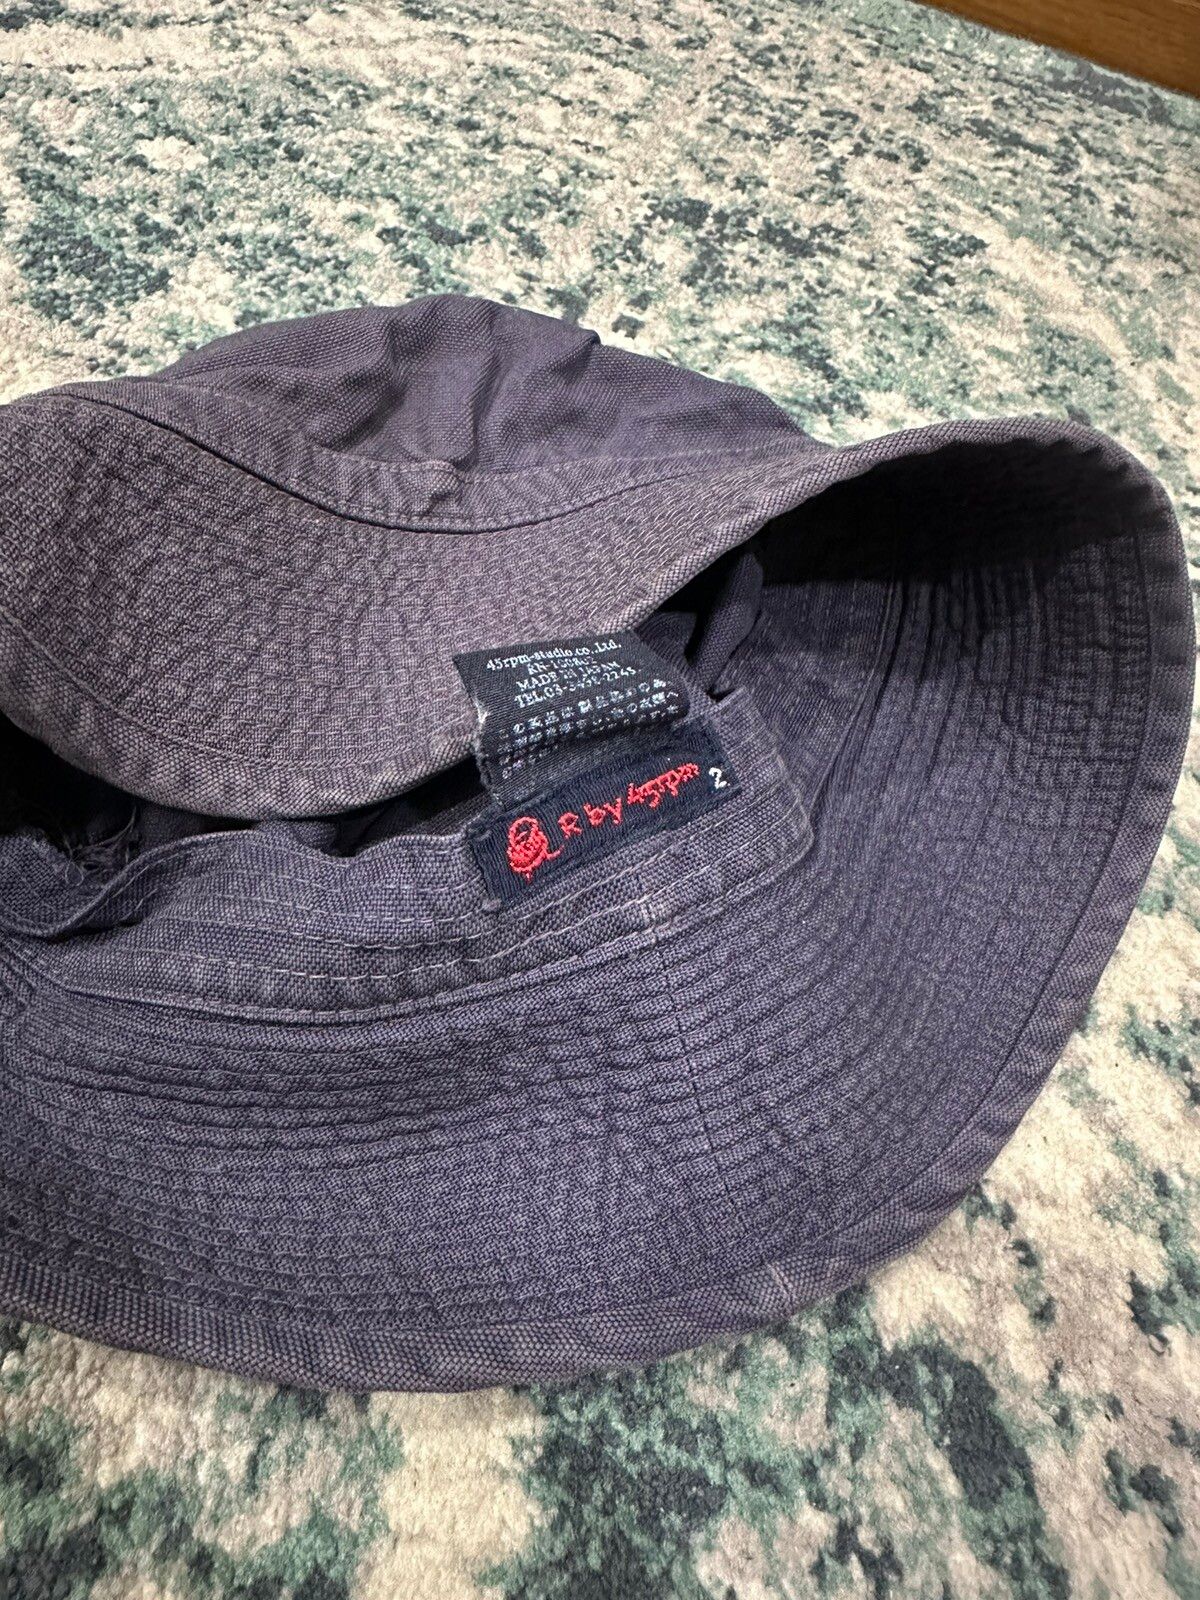 Rare Design R By 45rpm Kapital Boro Style Bucket Hat - 4